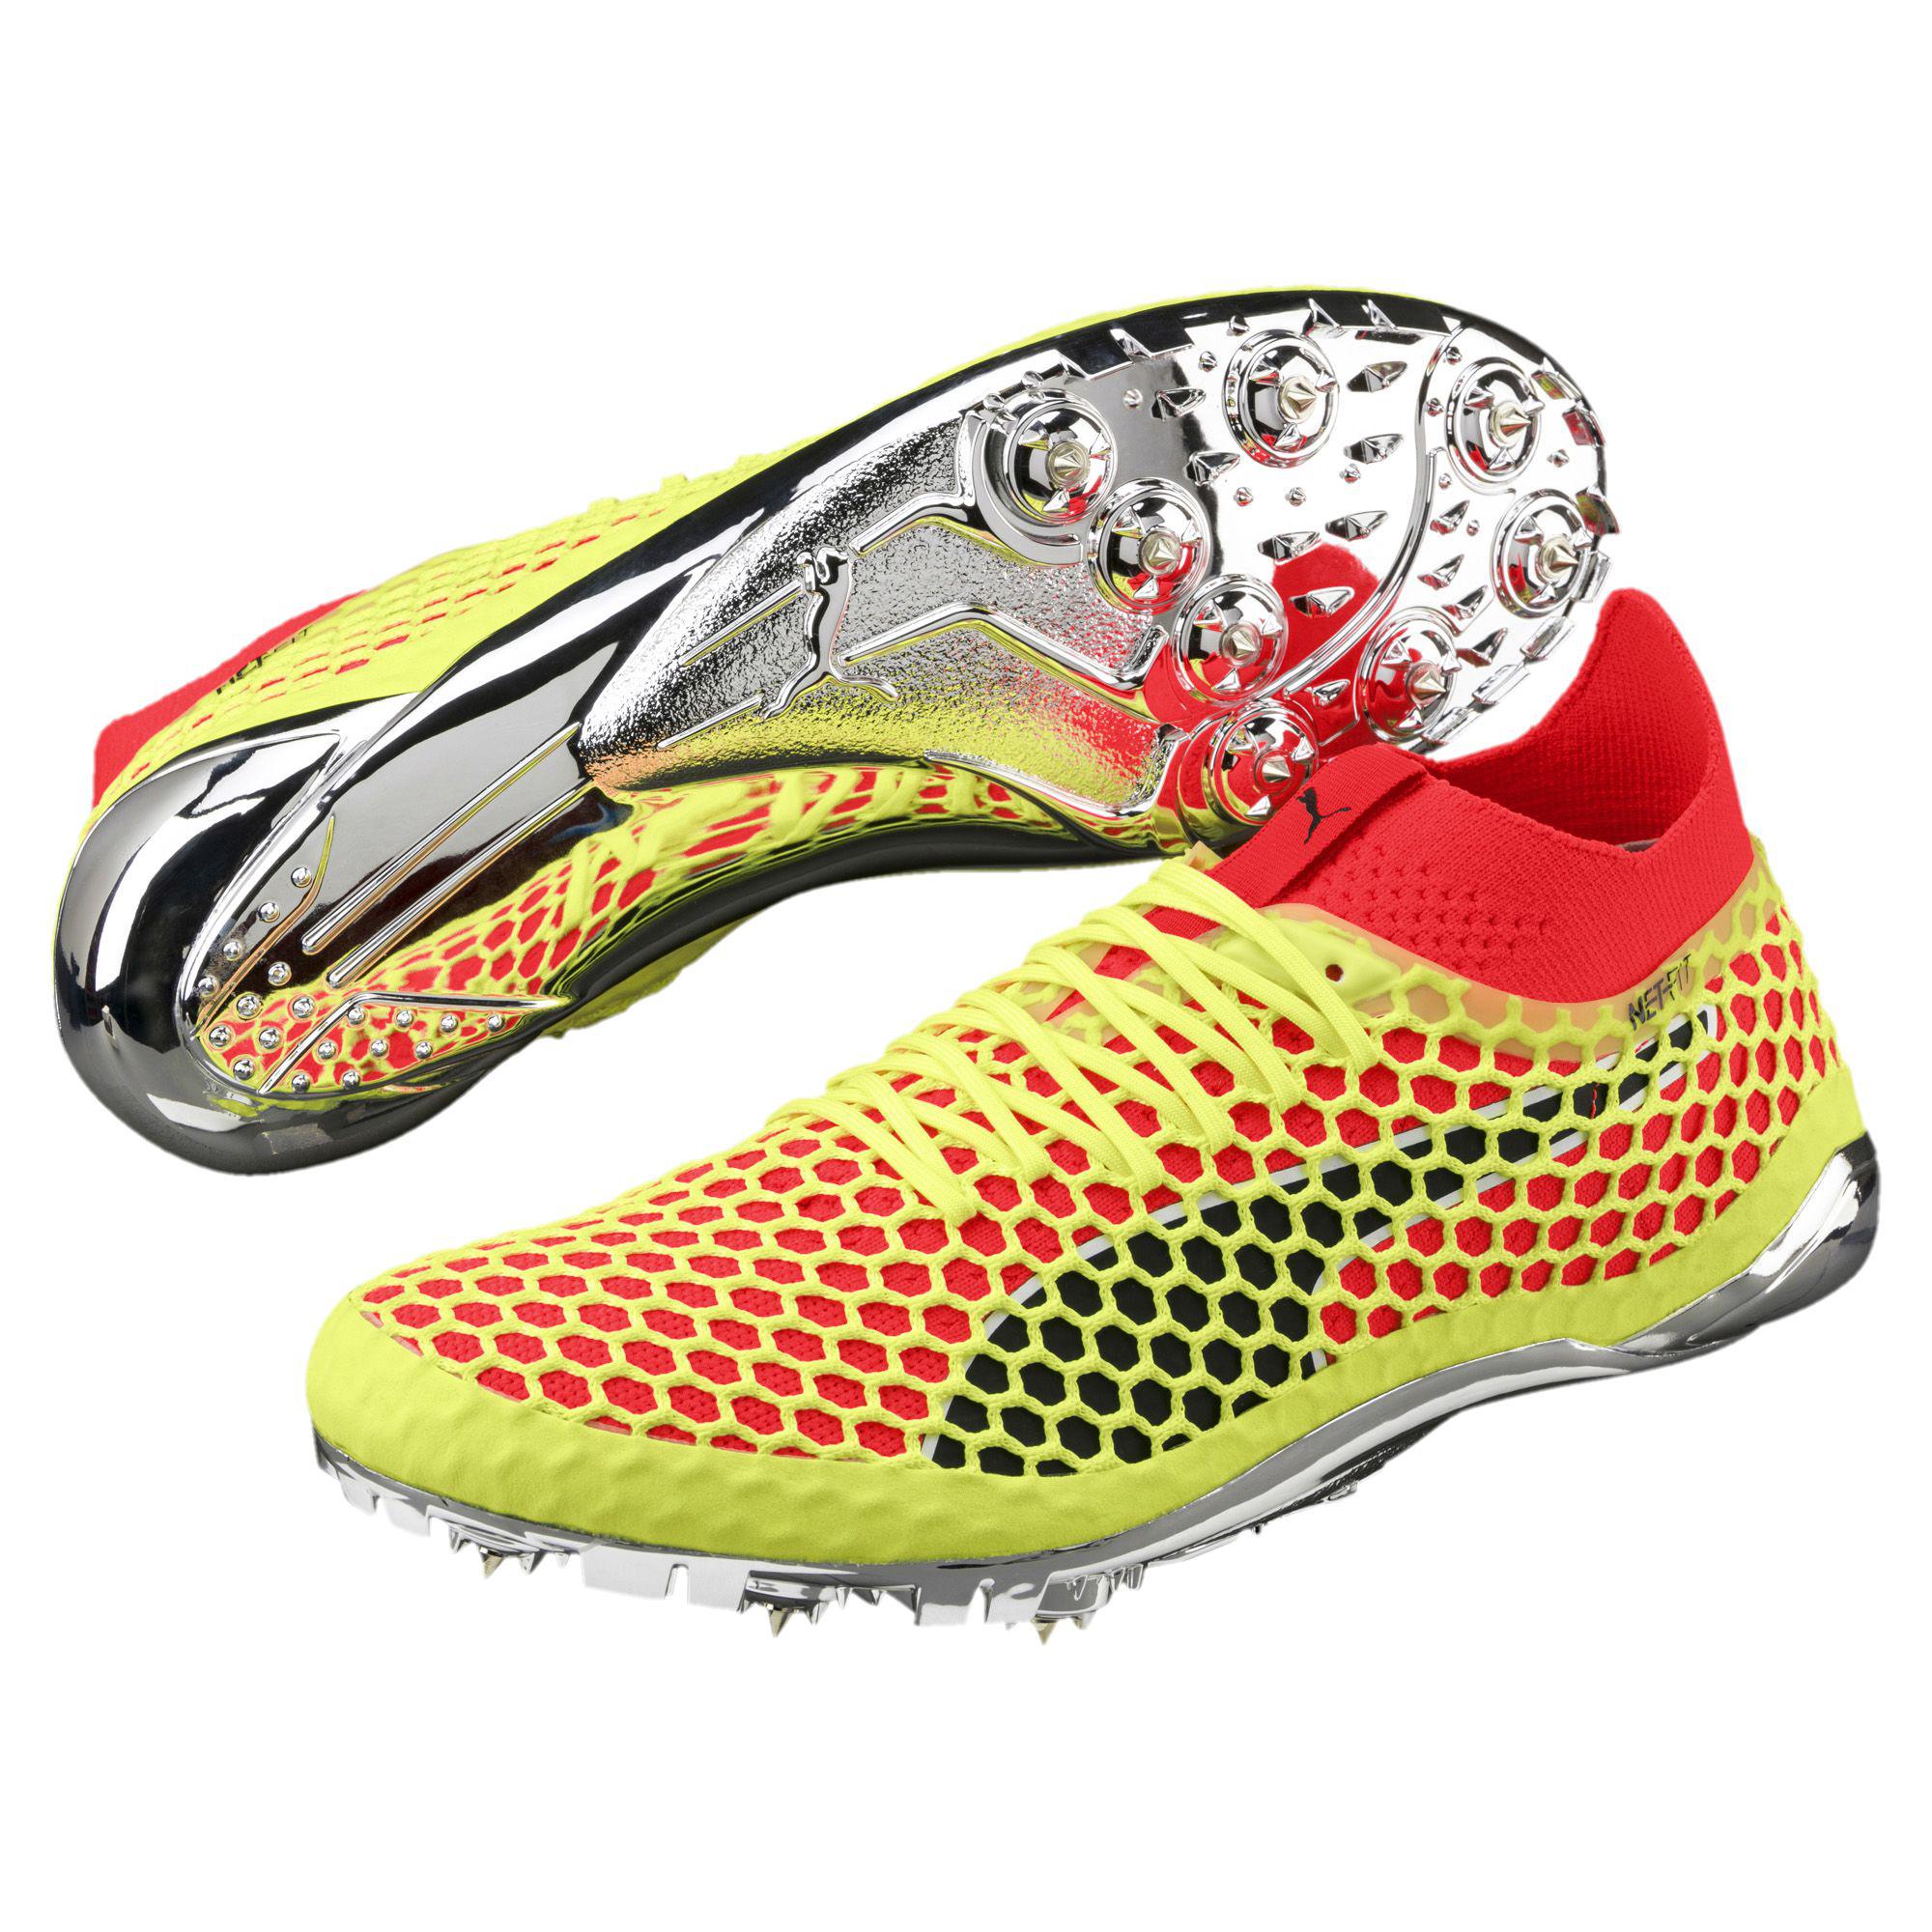 PUMA Evospeed Netfit Sprint Running Shoes for Men Lyst